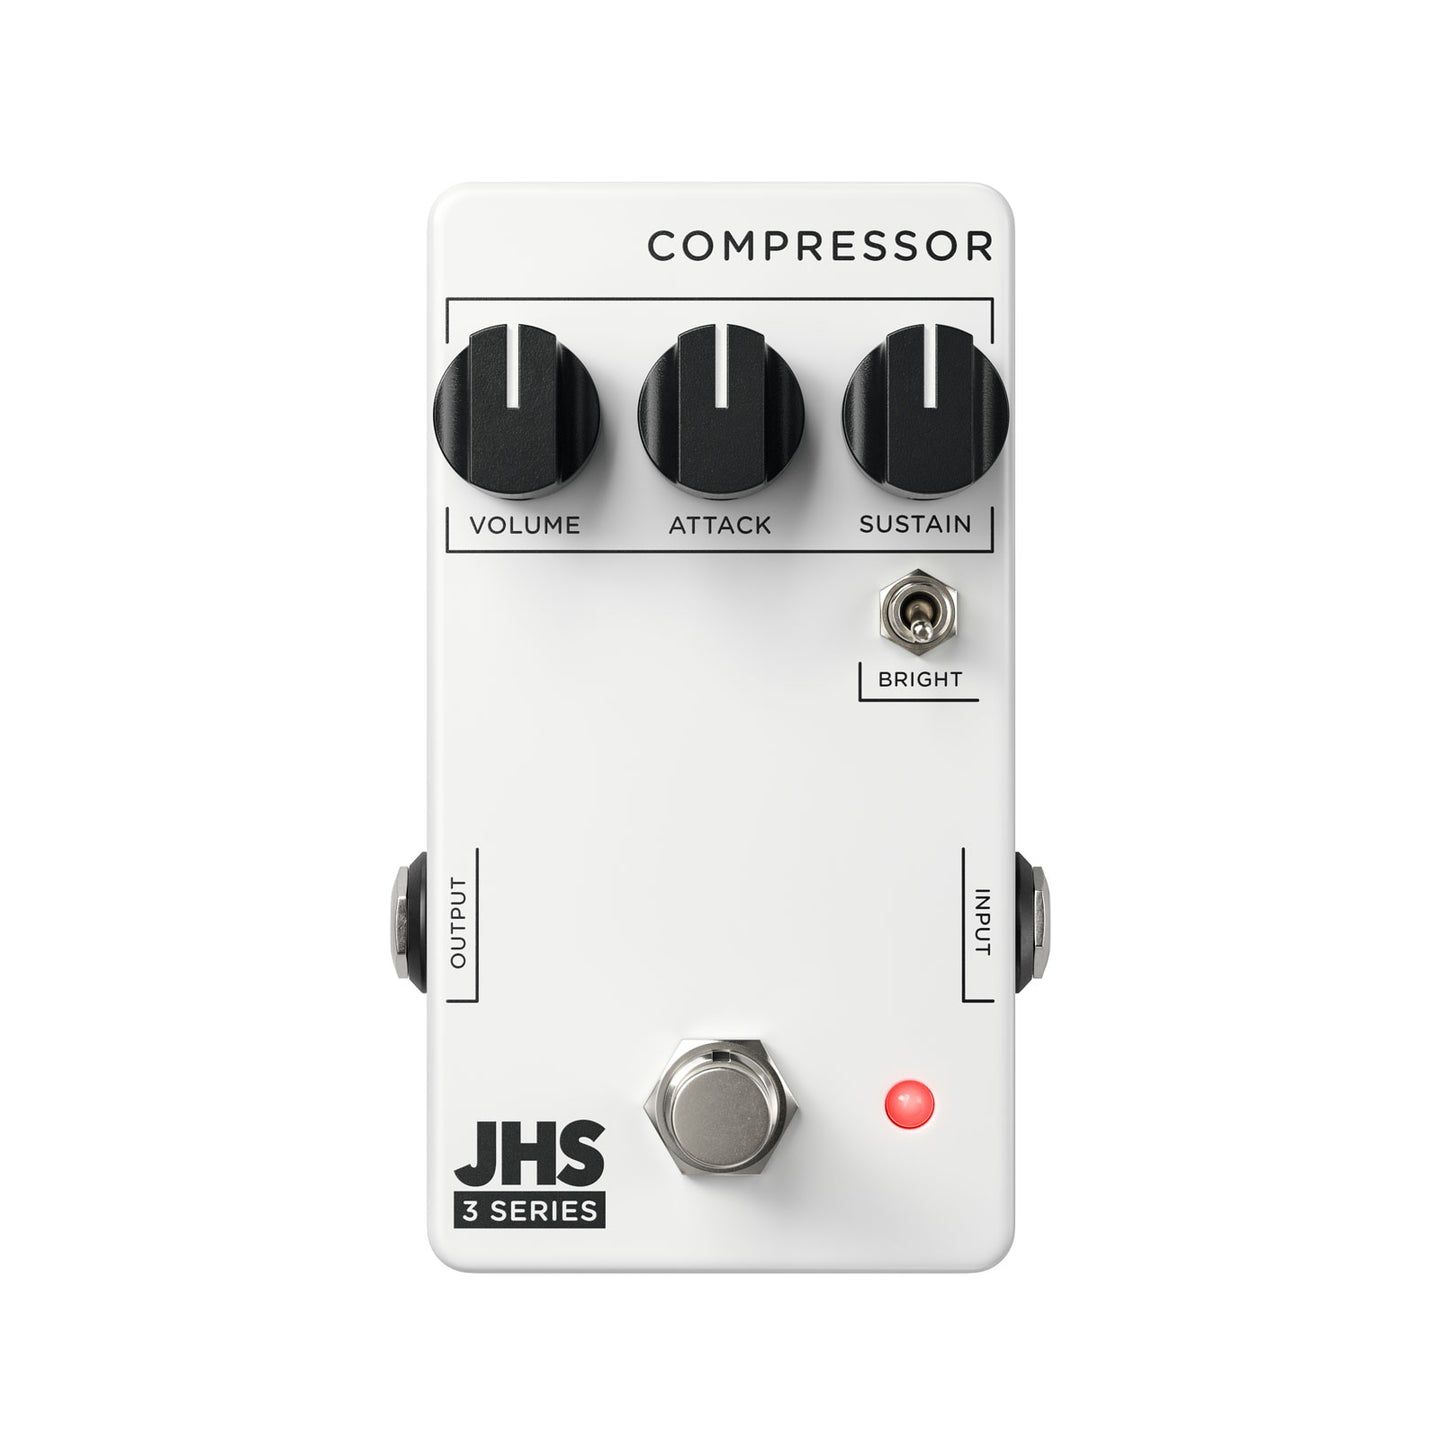 JHS 3 Series Compressor 2020